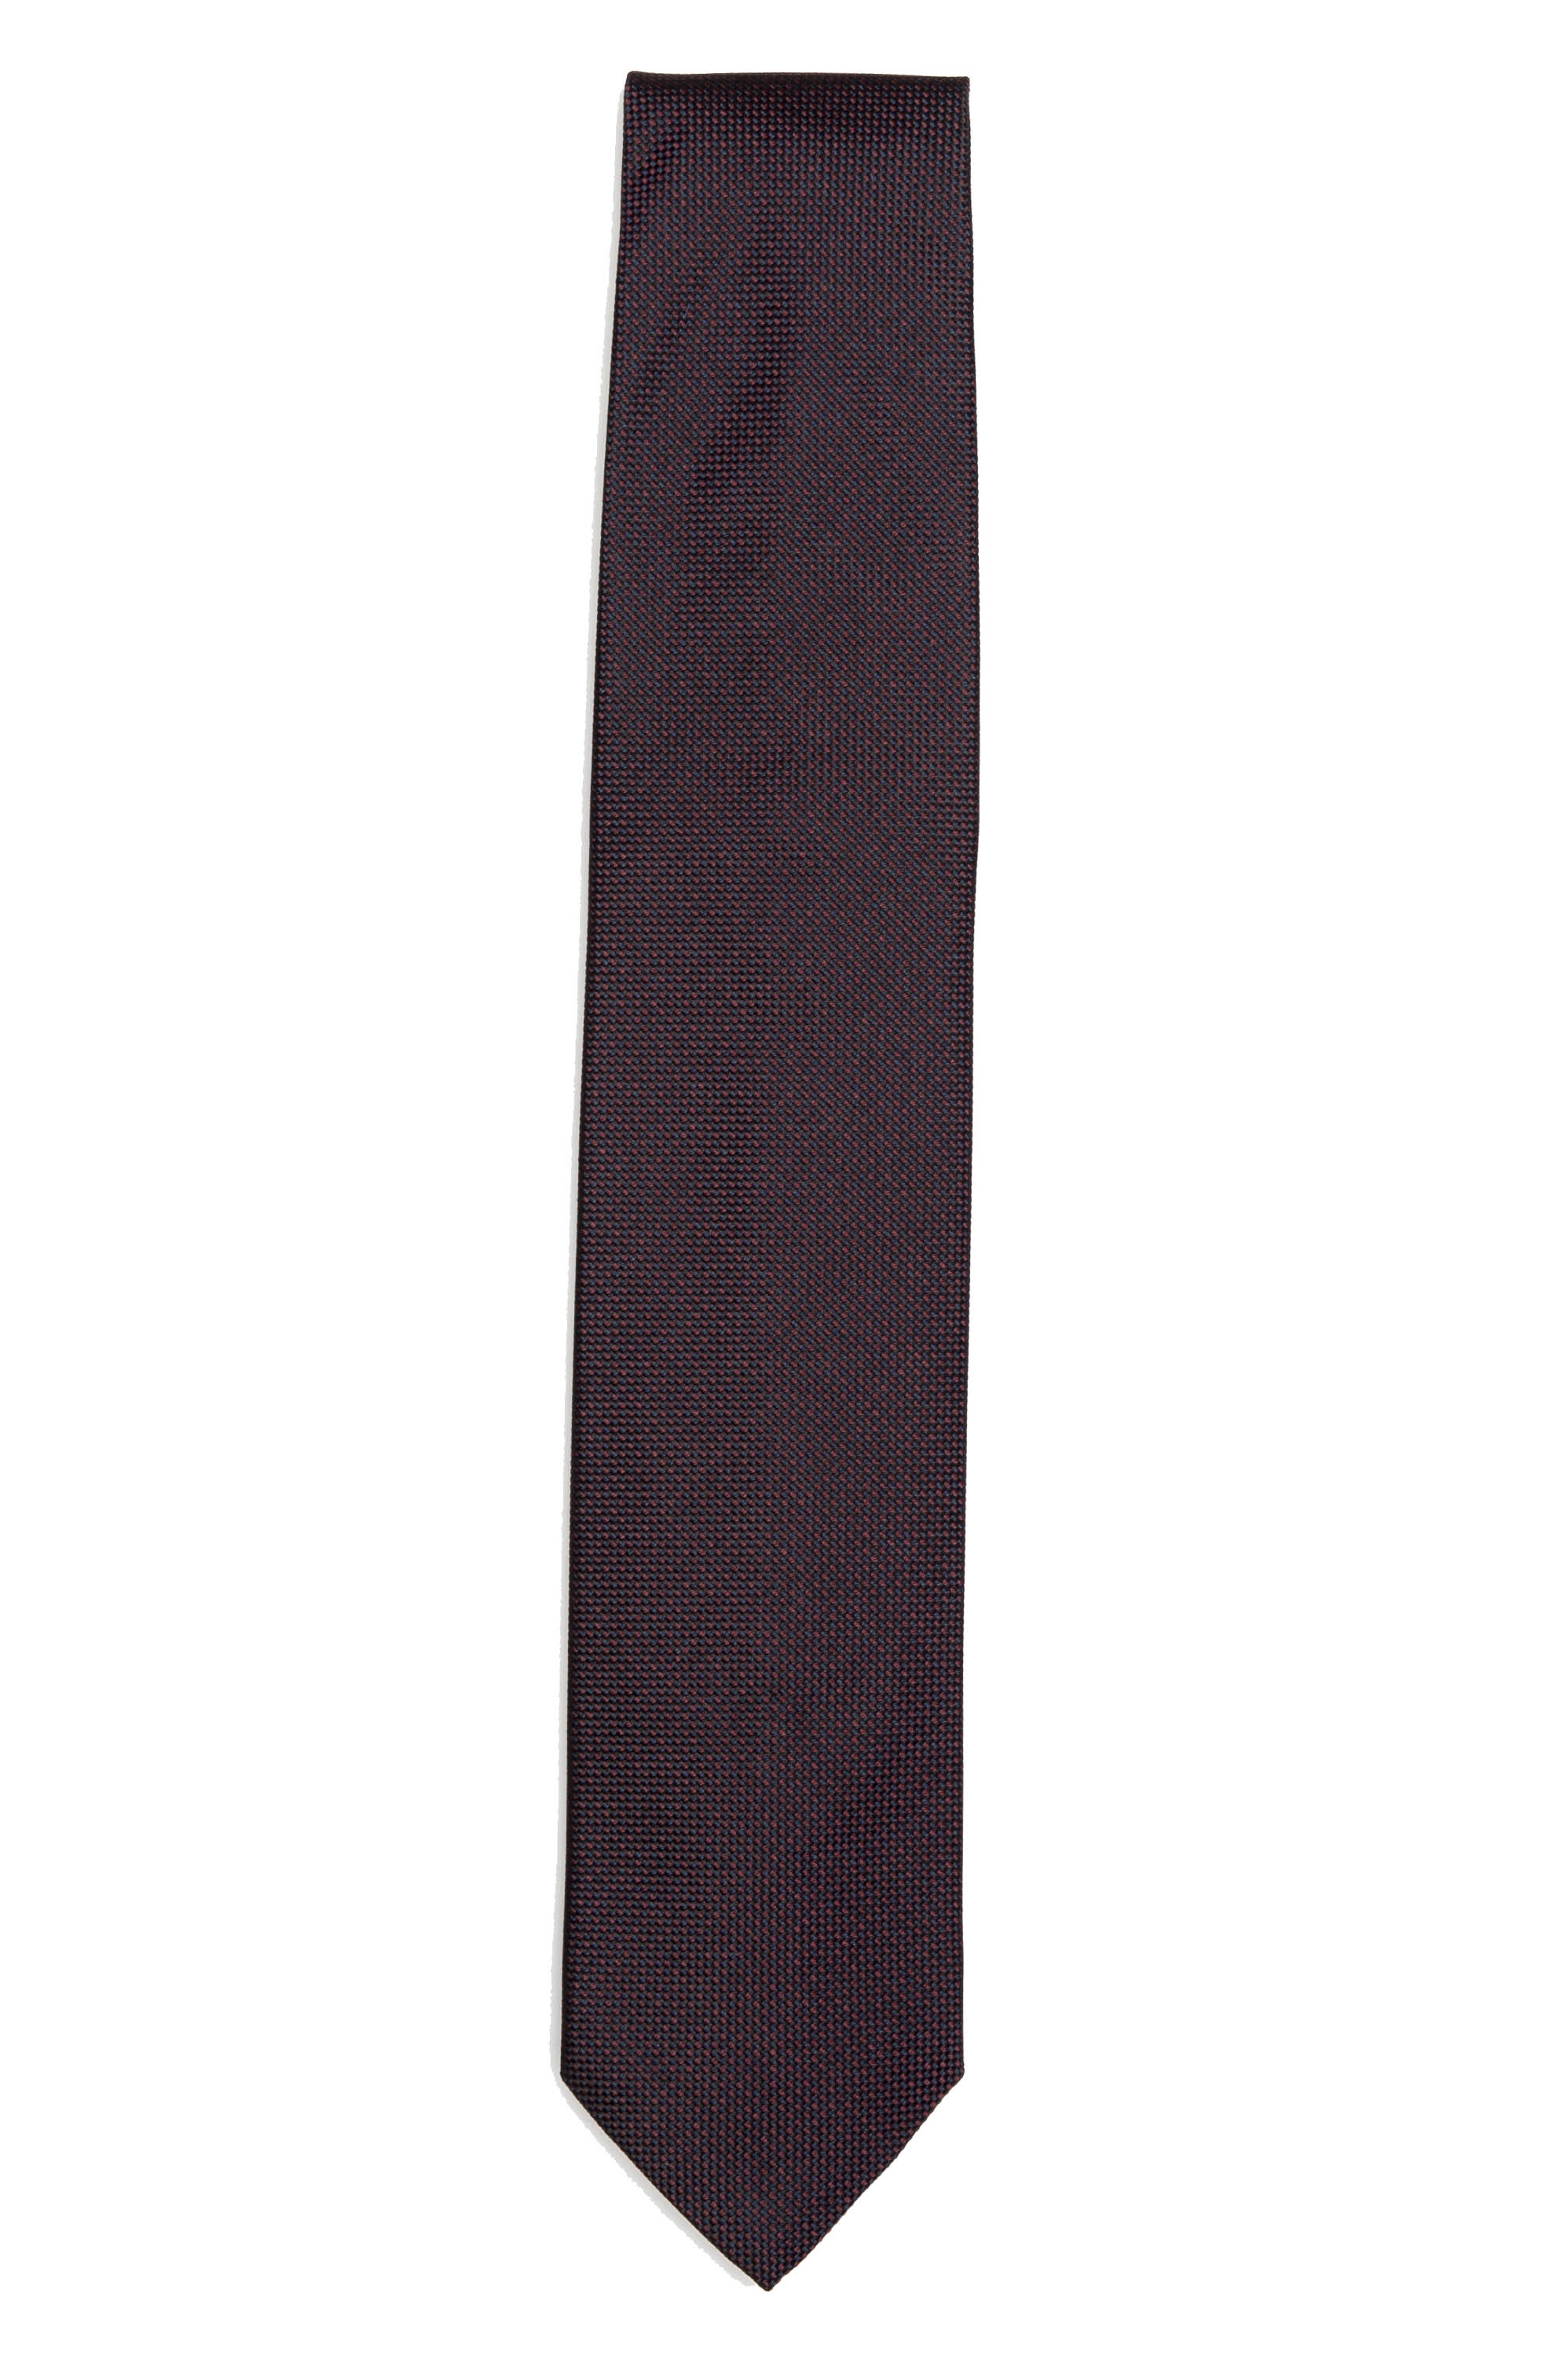 SBU 01577 Corbata clásica de seda hecha a mano 01